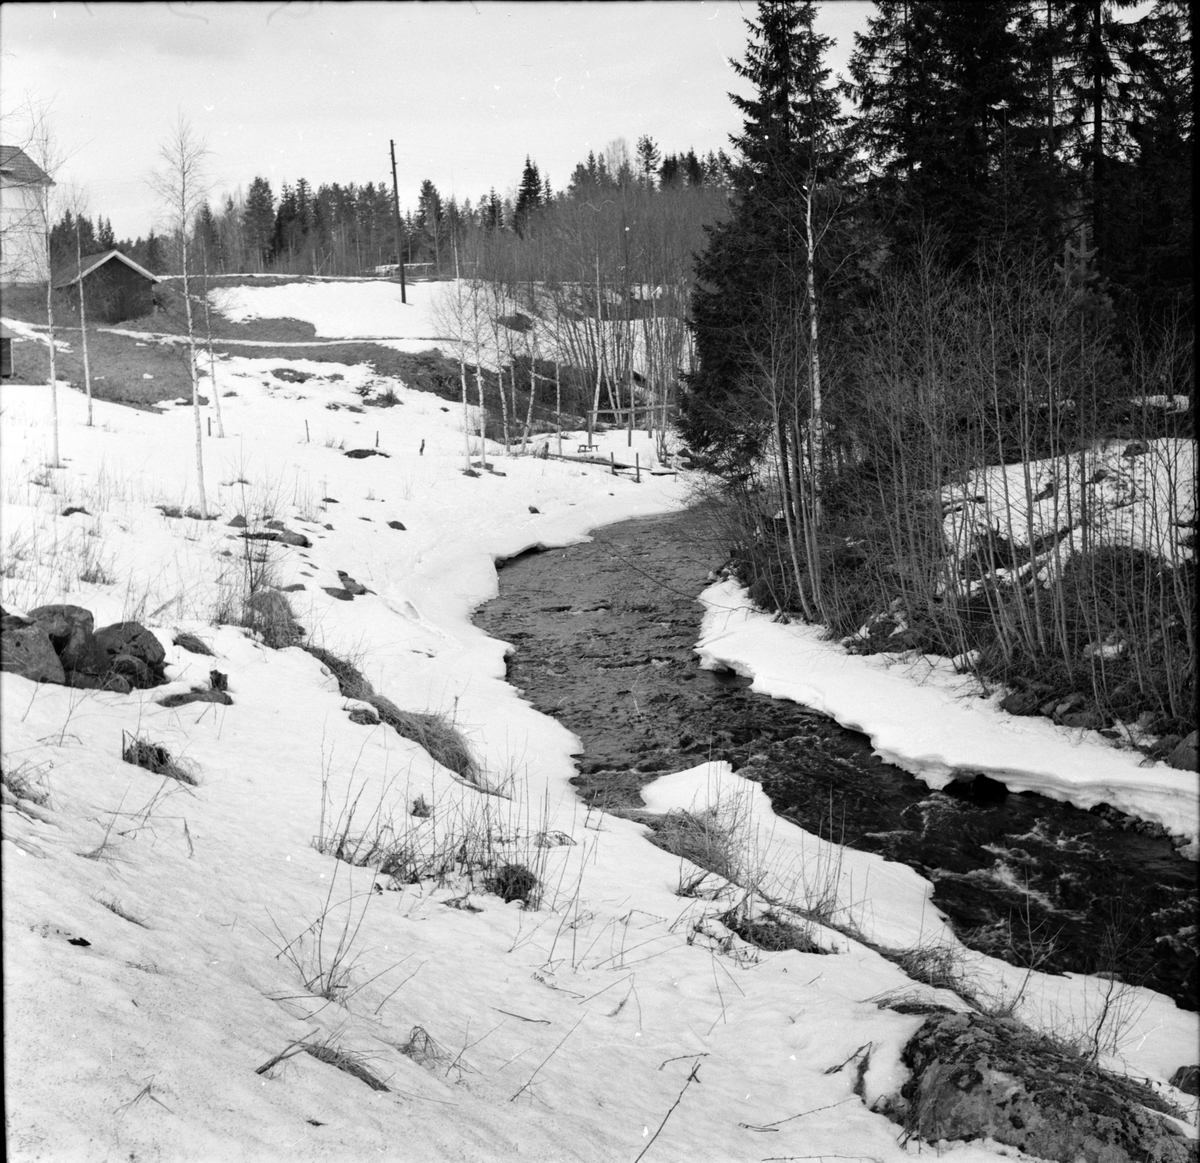 Ungsgård Erik,
Ovanåker,
Premiärfiske,
1 April 1965